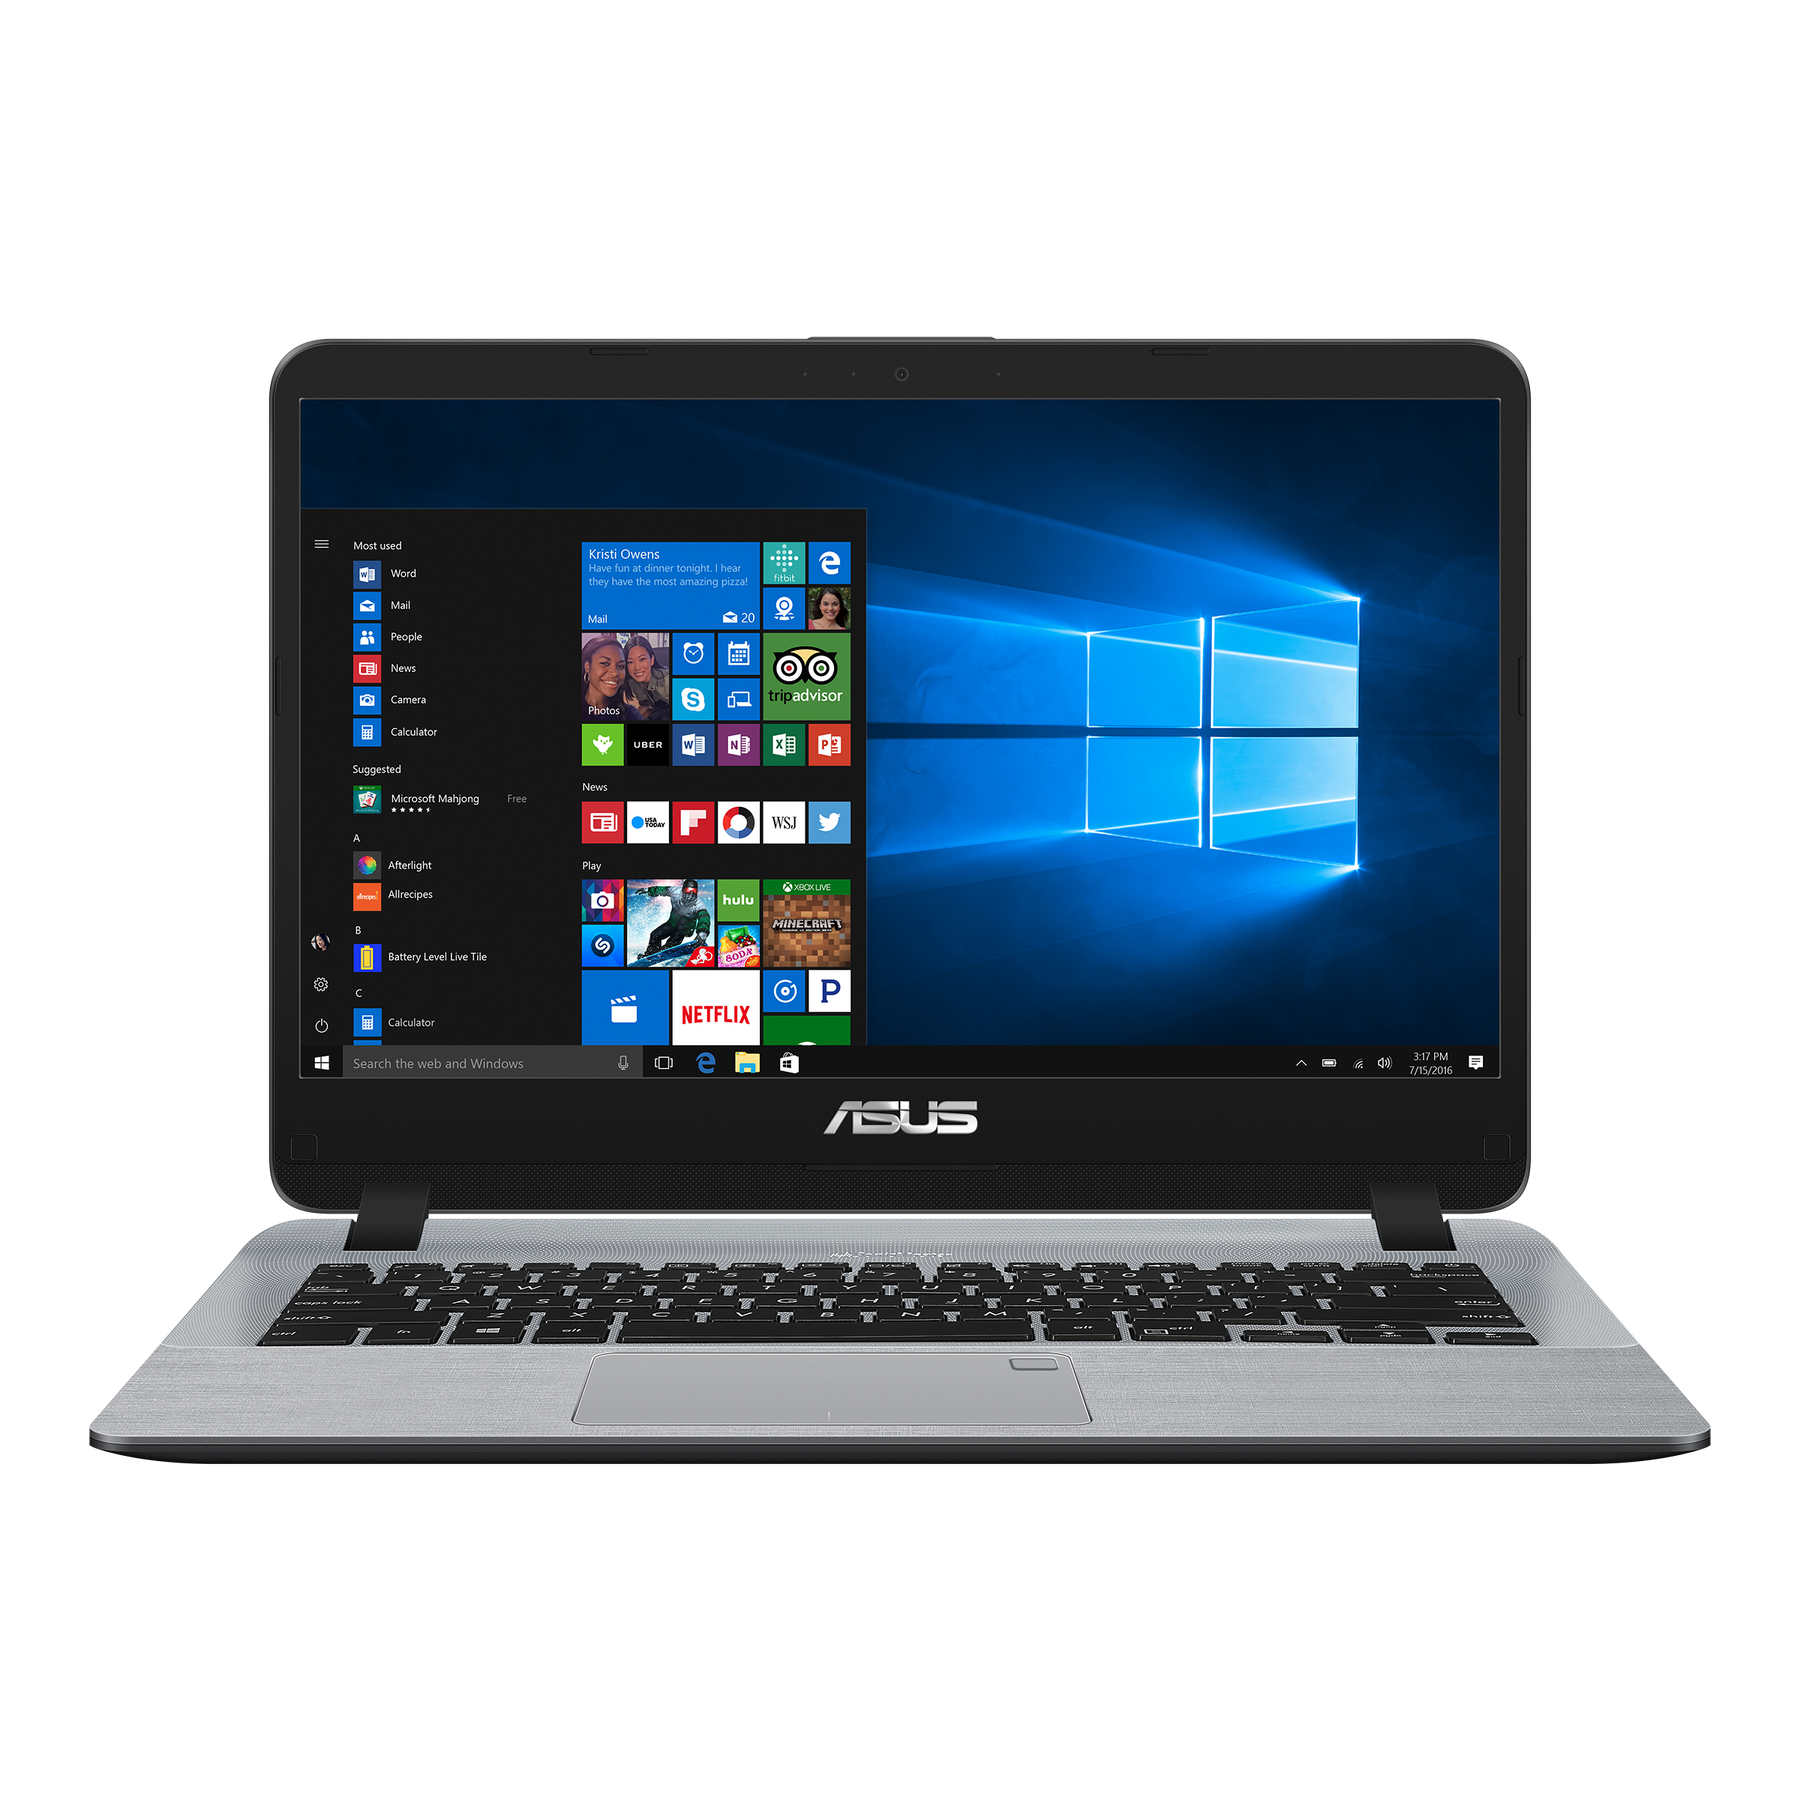 Asus Vivobook X407 14" Laptop i7-7500U 256GB 8GB RAM - Very Good Condition